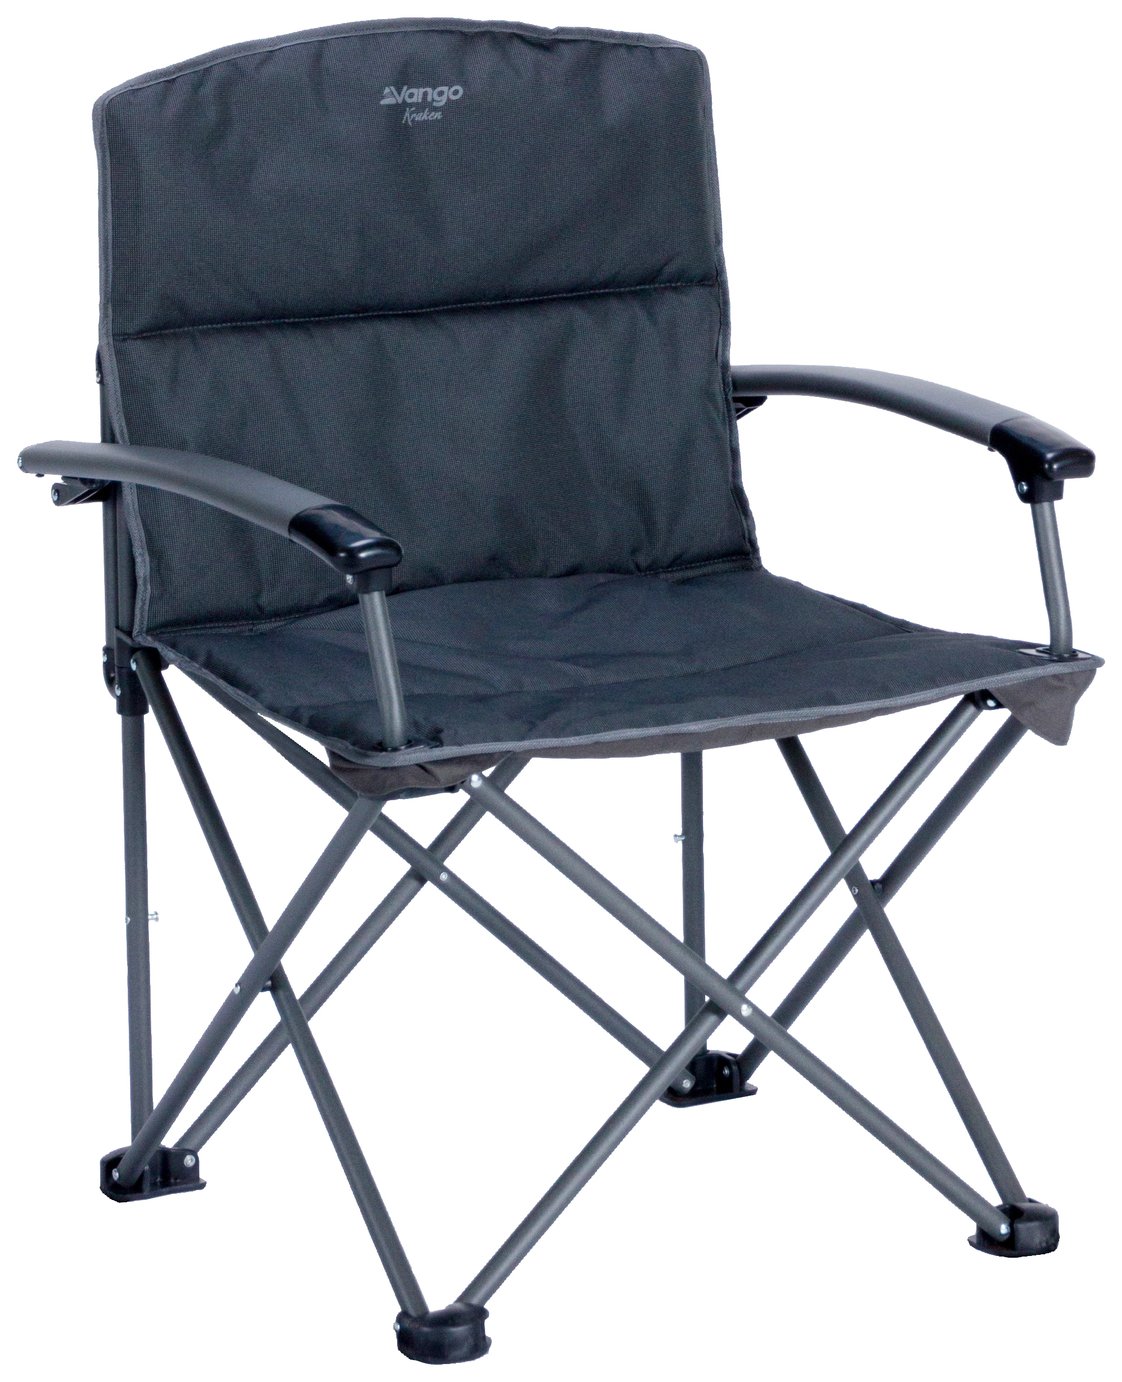 childrens camping chair argos